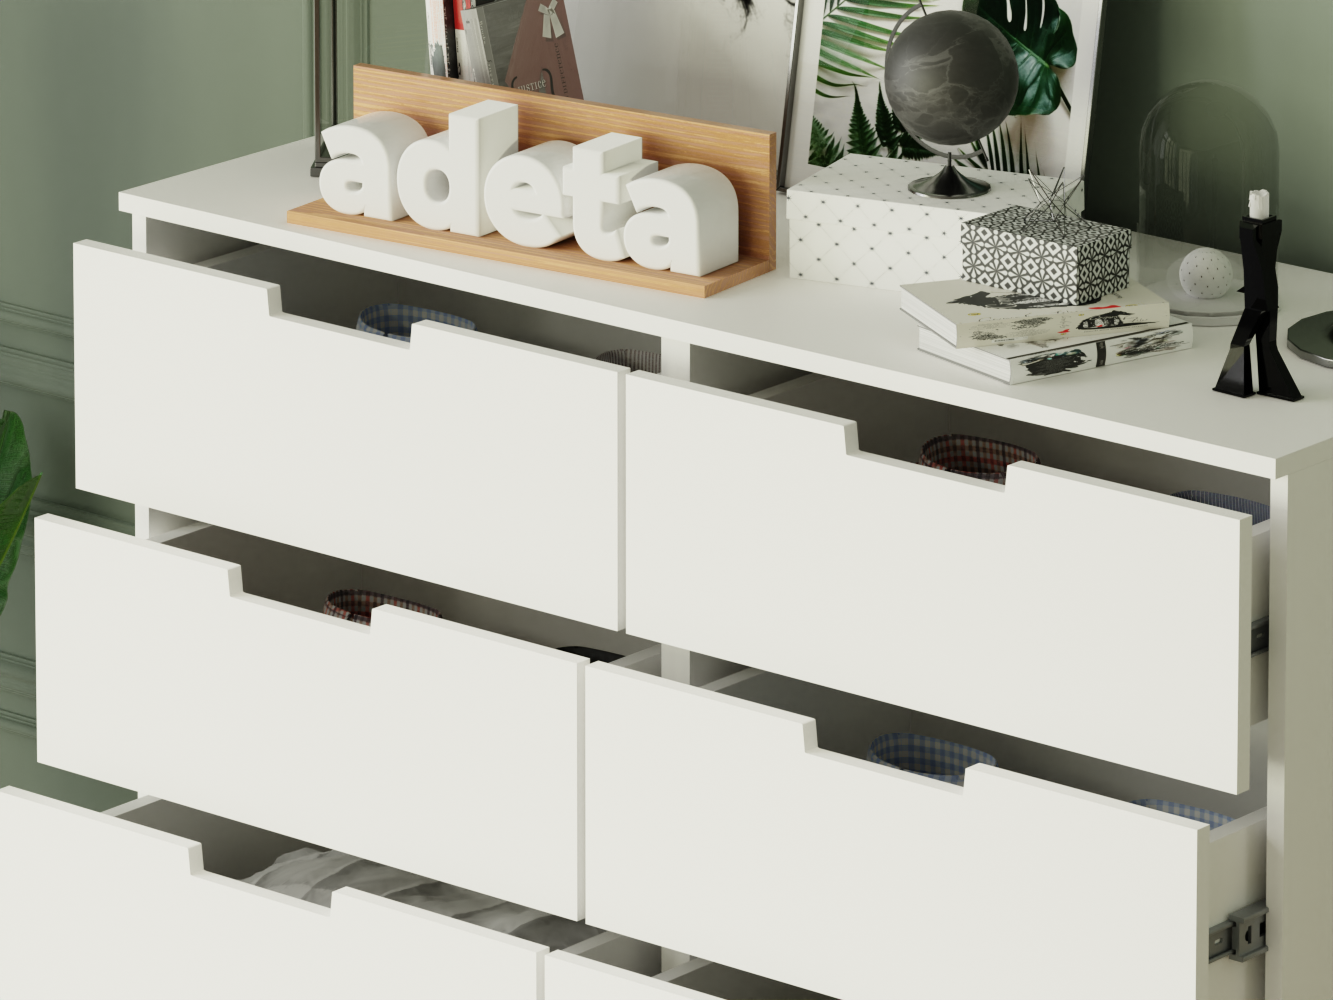 Изображение товара Комод Нордли 16 white ИКЕА (IKEA), 120x45x130 см на сайте adeta.ru